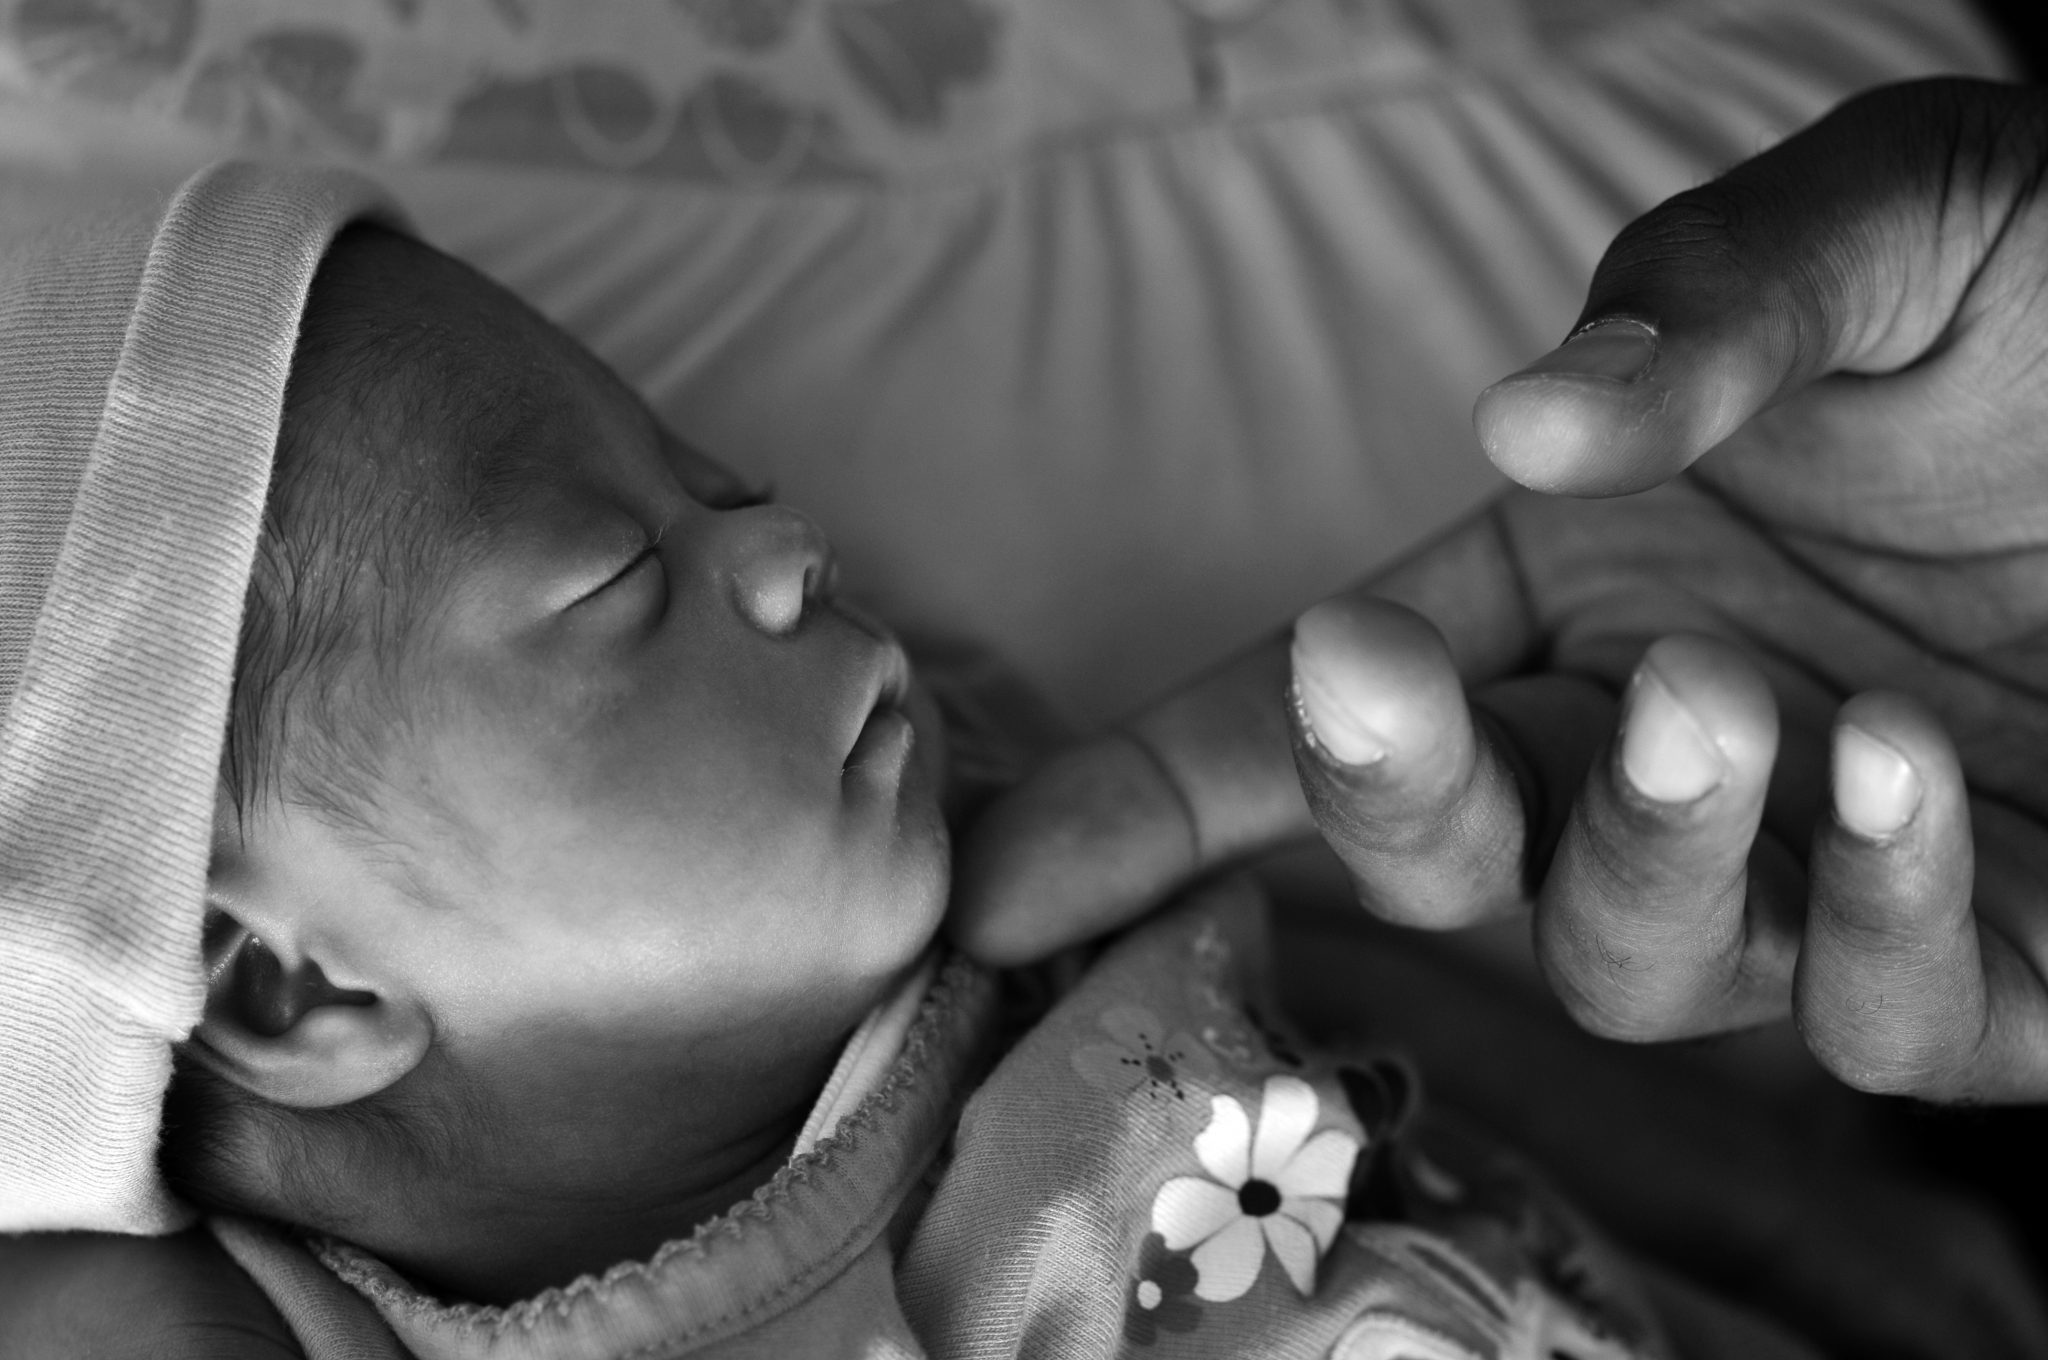 An adult hand gently touching a newborn's face